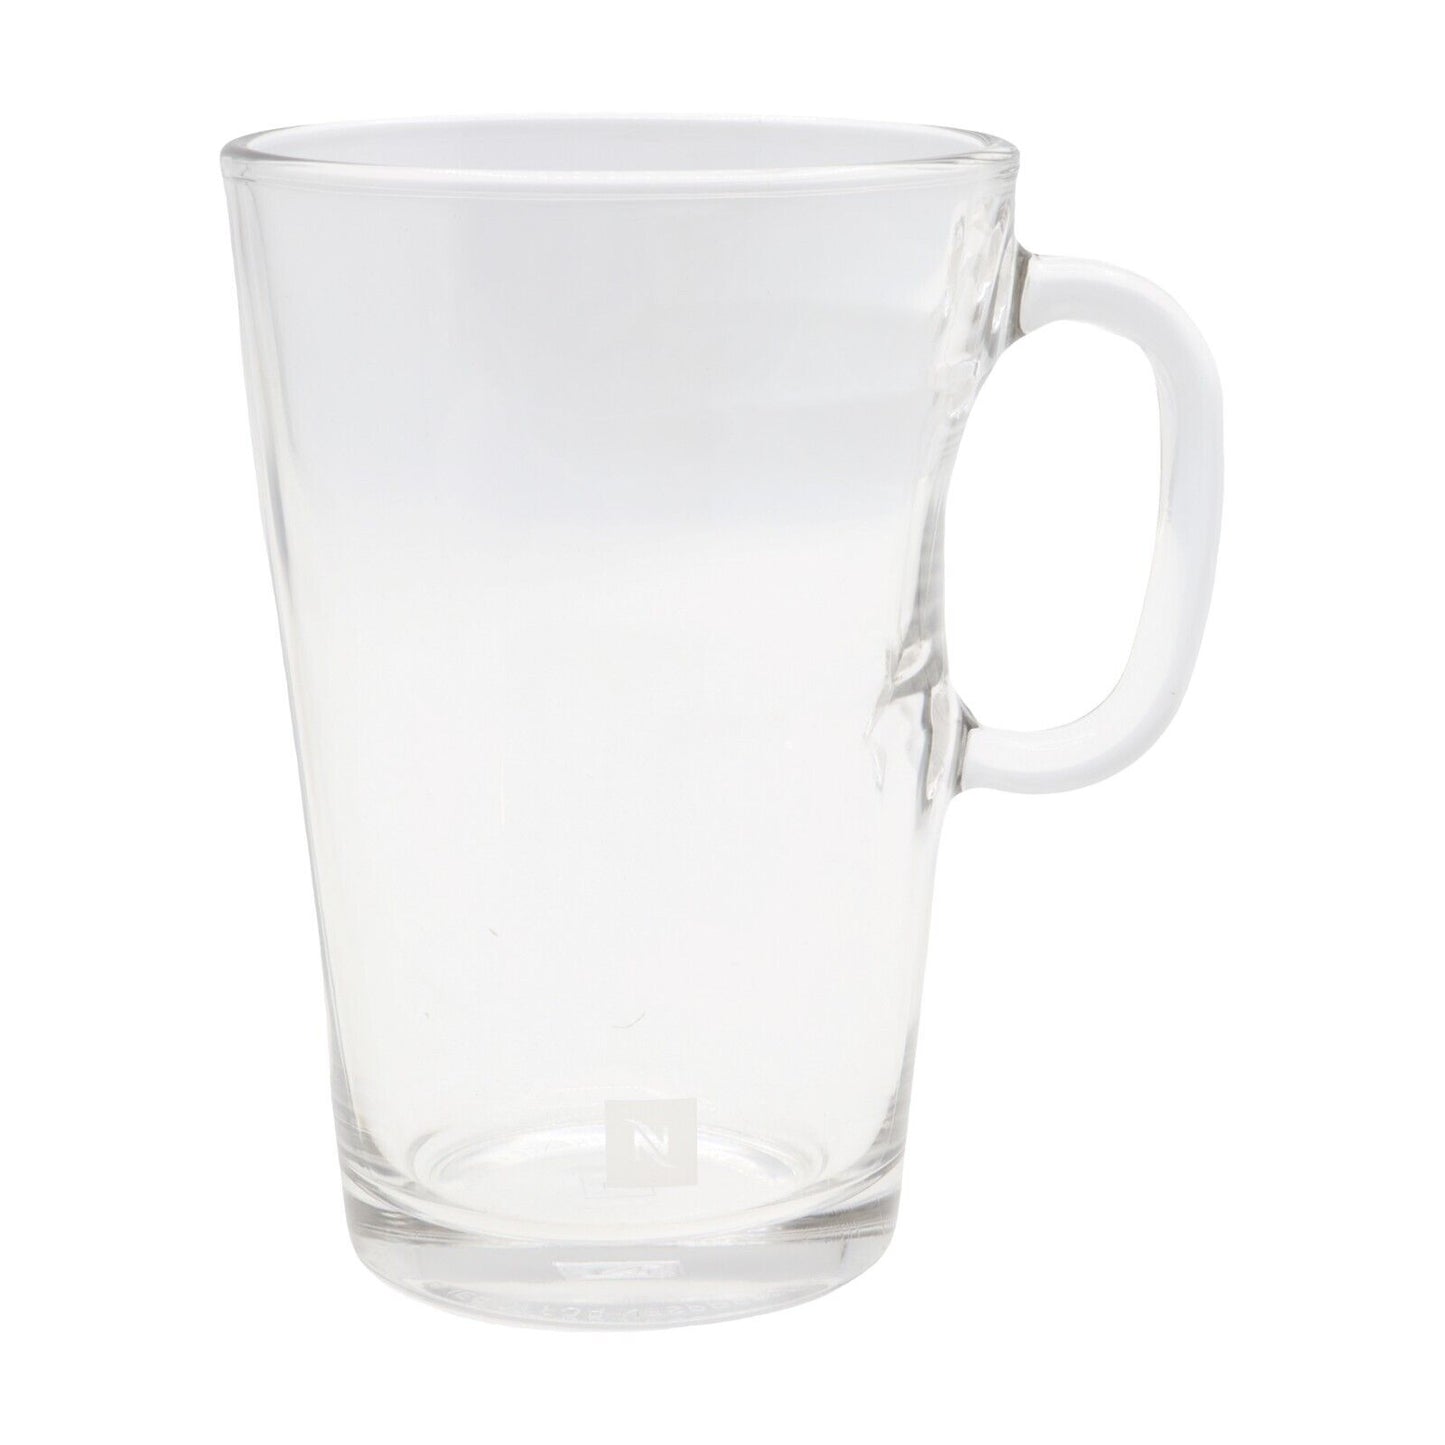 Krups Nespresso tazza bicchiere vetro per macchina caffè Atelier XN8908 NL8908